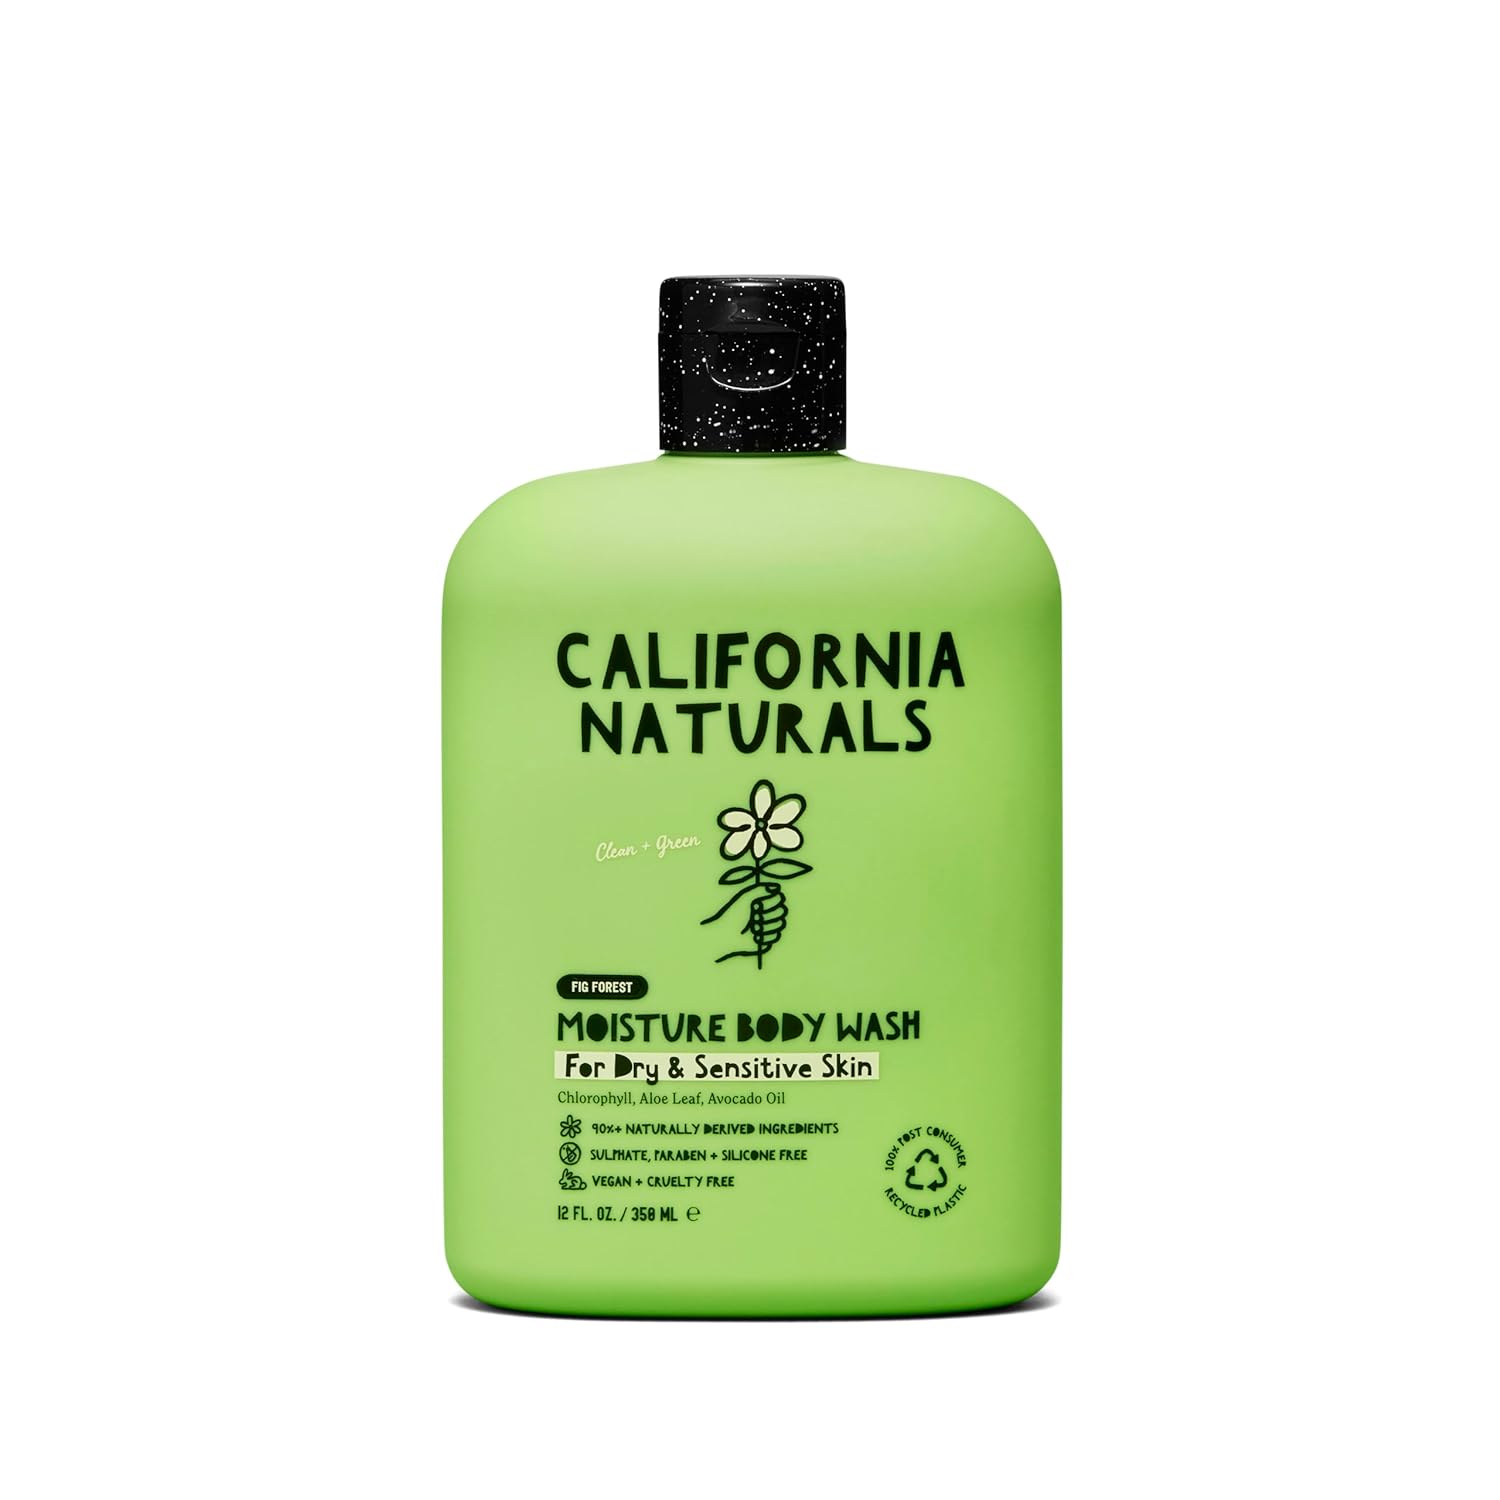 California Naturals Moisture Body Wash, Gentle Shower Gel Cleanser for Dry, Sensitive Skin, Moisturizing, Hydrating, Natural, Vegan, Paraben & Sulfate Free Body Moisturizer for Women & Men, 12 fl oz